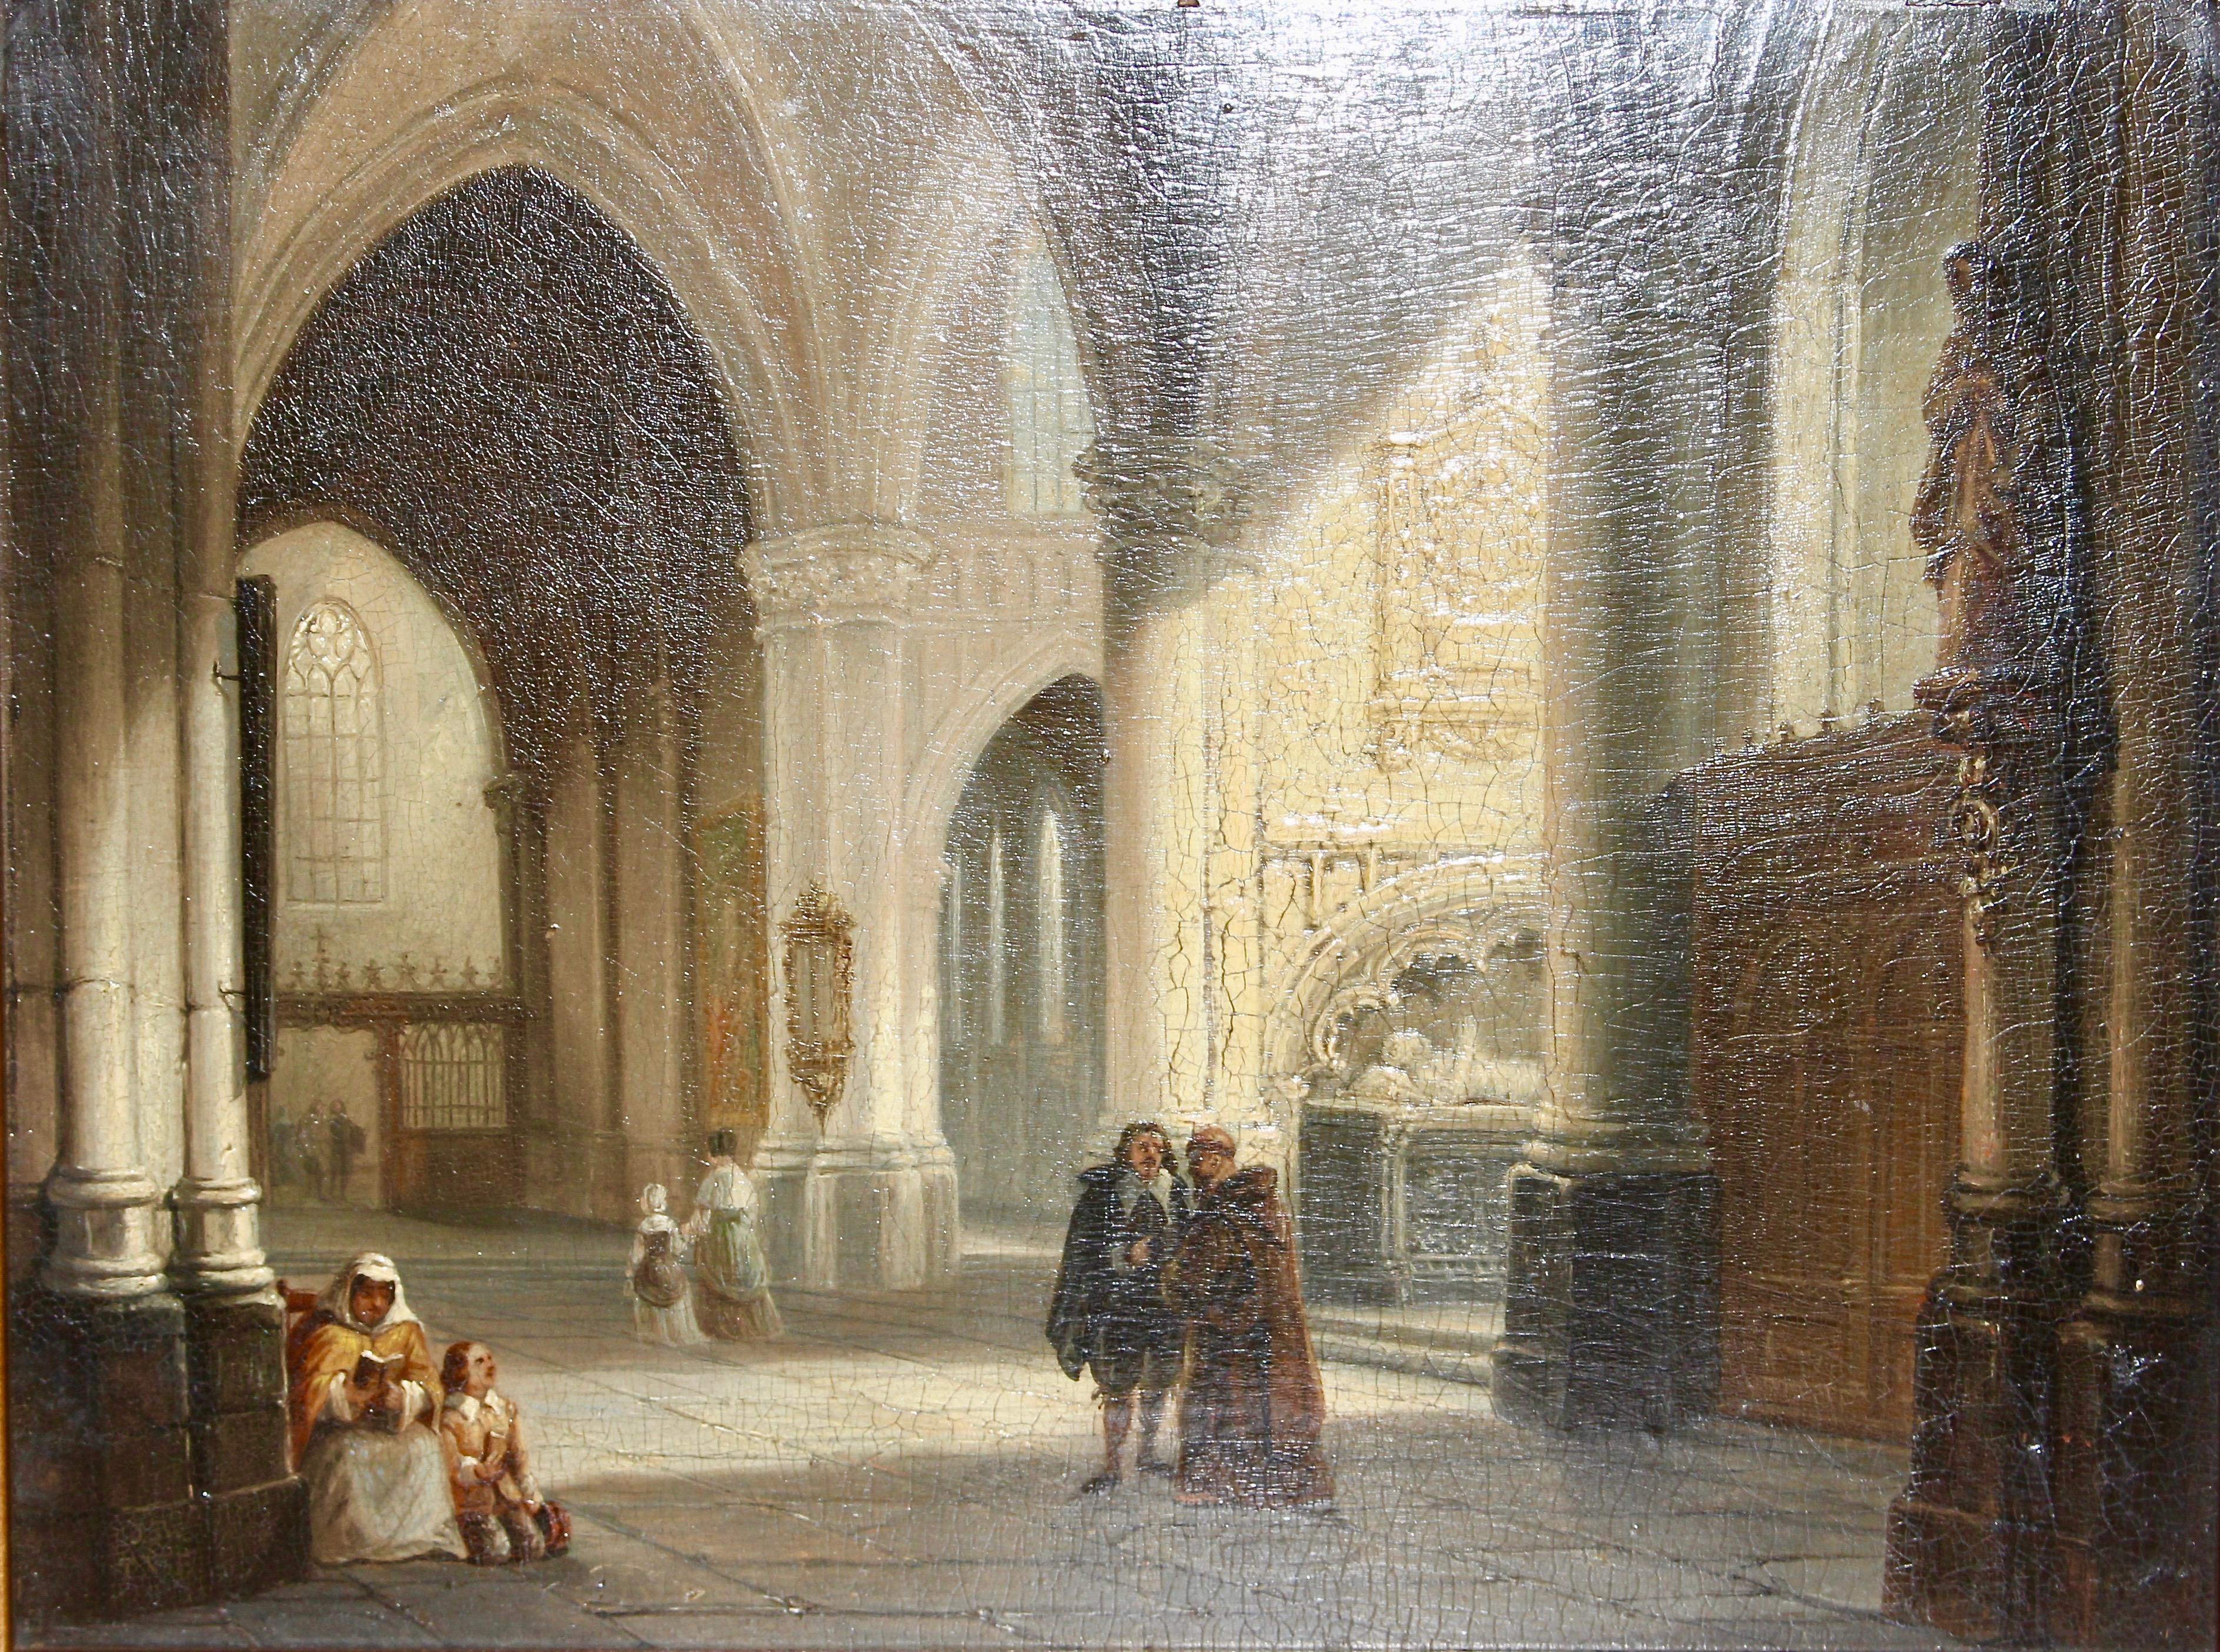 JAN BAPTIST TETAR VAN ELVEN Figurative Painting - Painting, 19th century oil on panel, "Cathedral / Church" by J.B. Tetar v. Elven